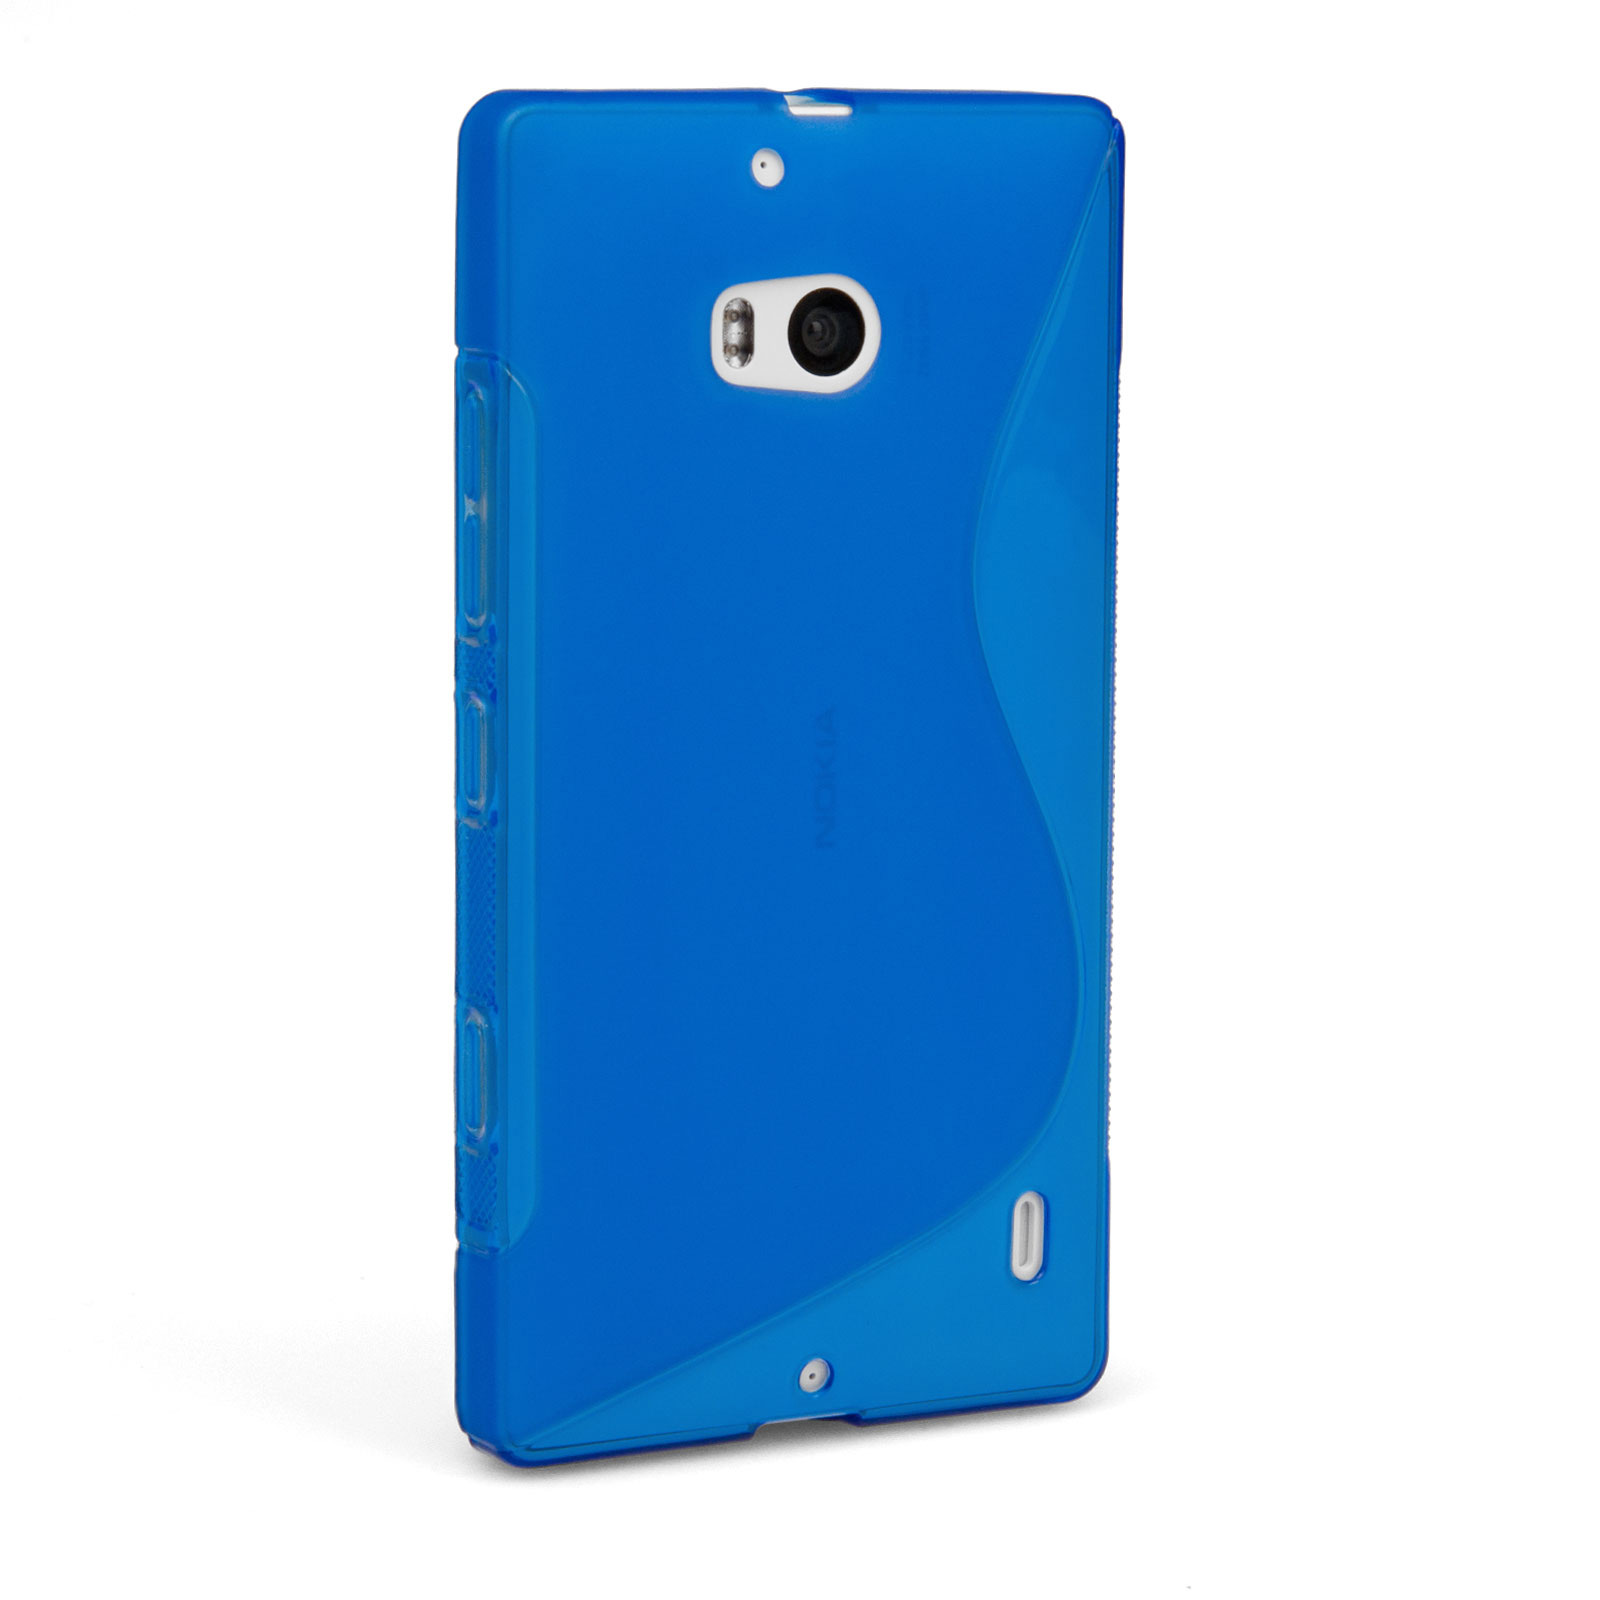 Caseflex Nokia Lumia 930 Silicone Gel S-Line Case - Blue